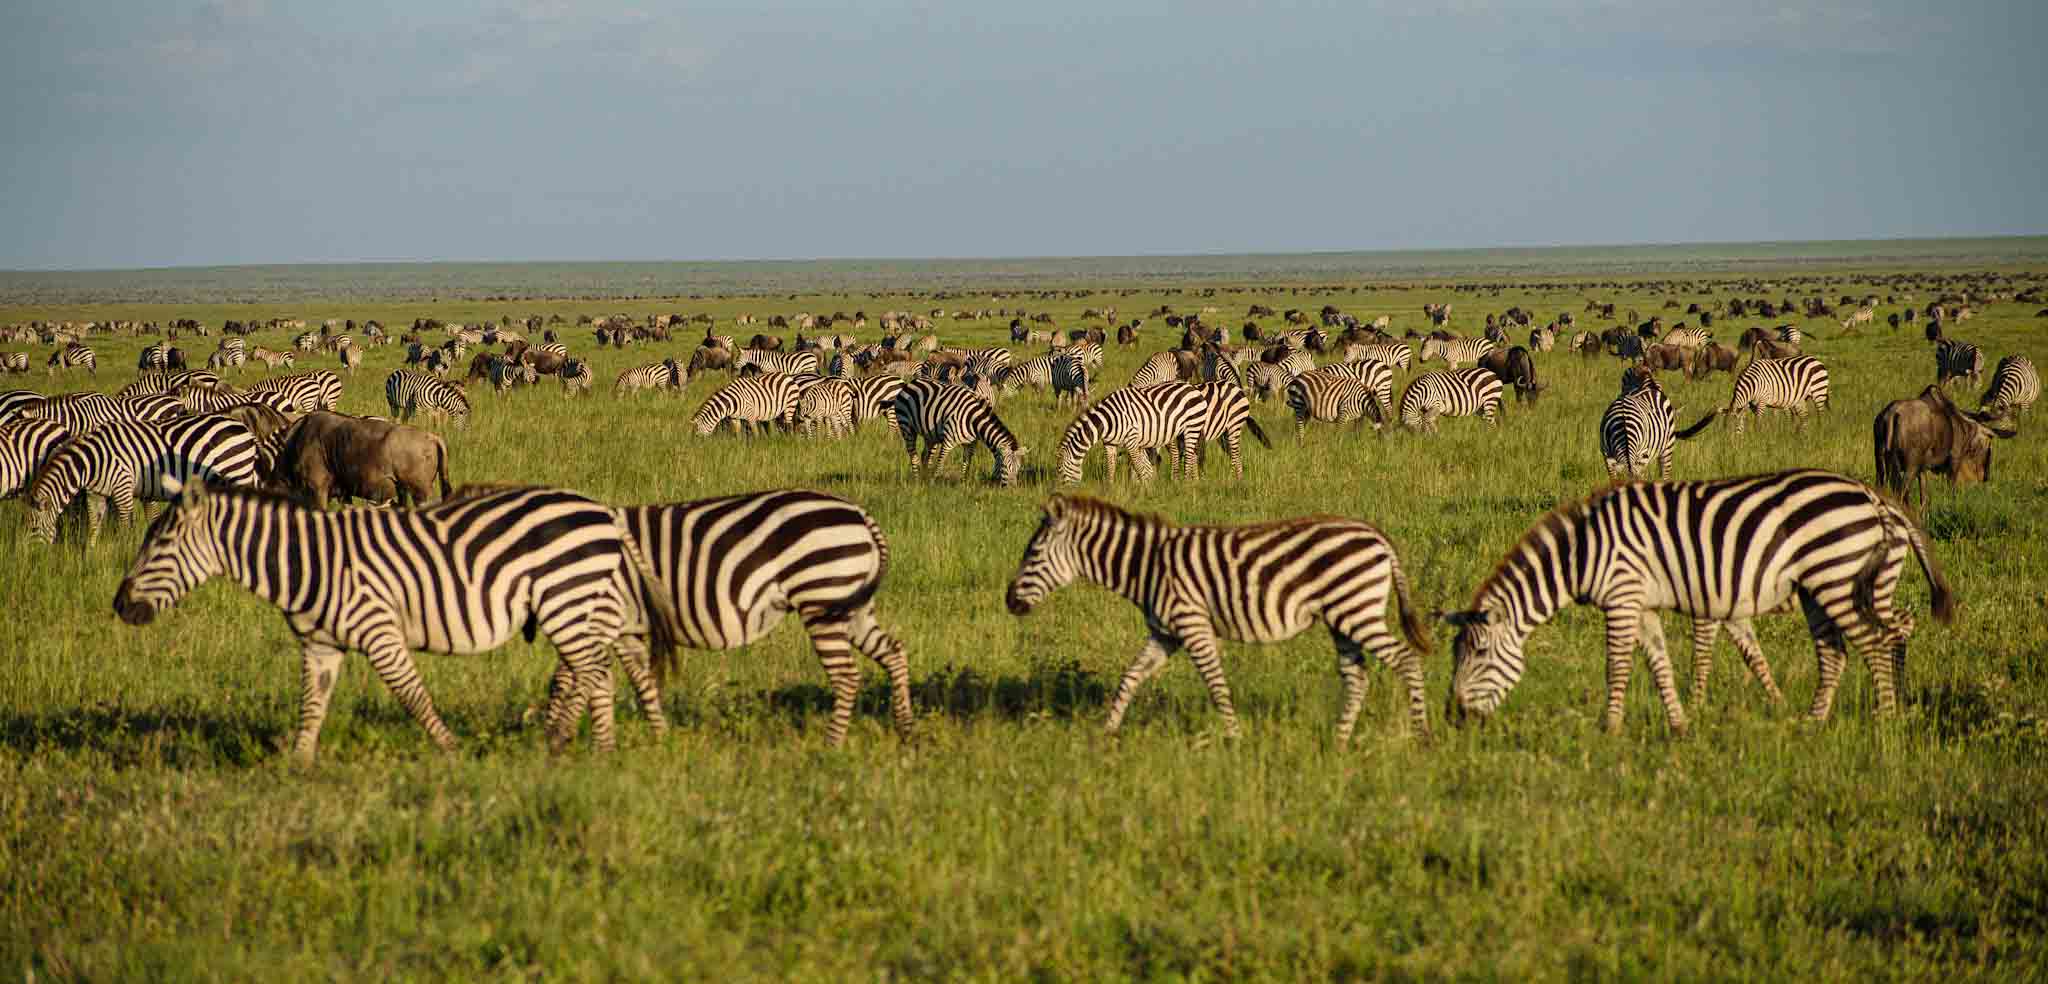 Activities in Masai Mara National Park